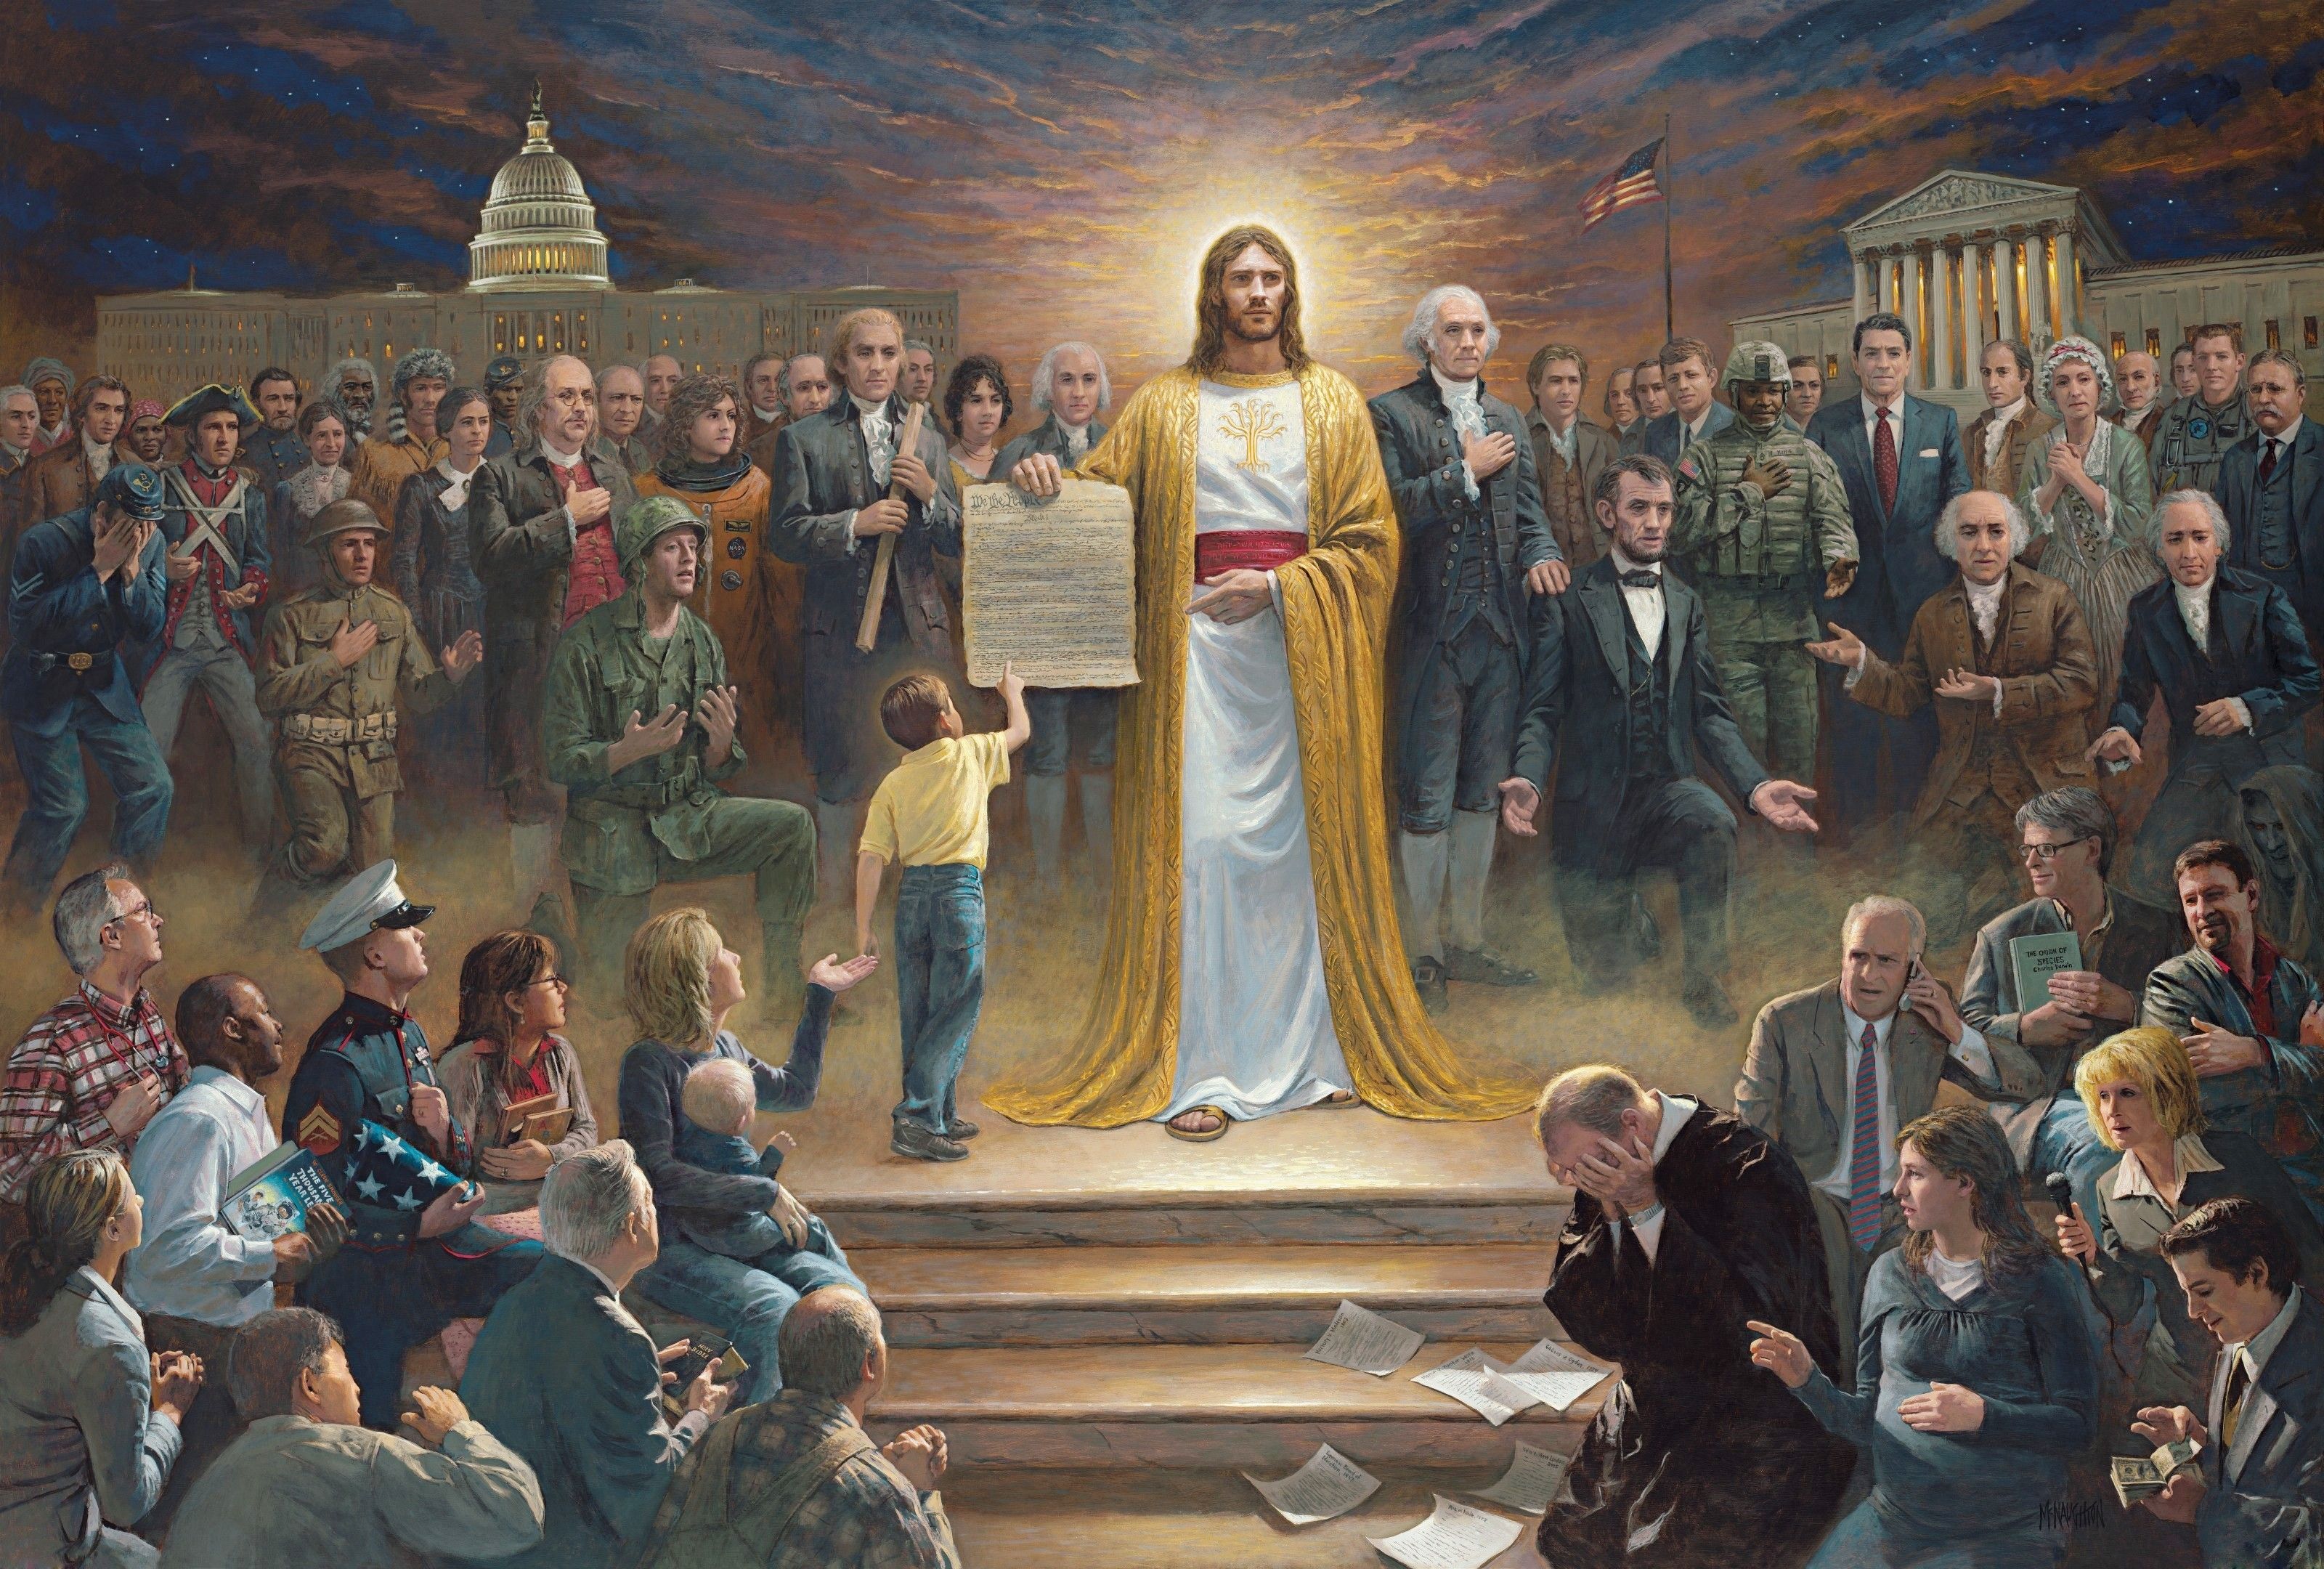 God / Lord Jesus Christ HD Wallpaper, Image, Photo Free